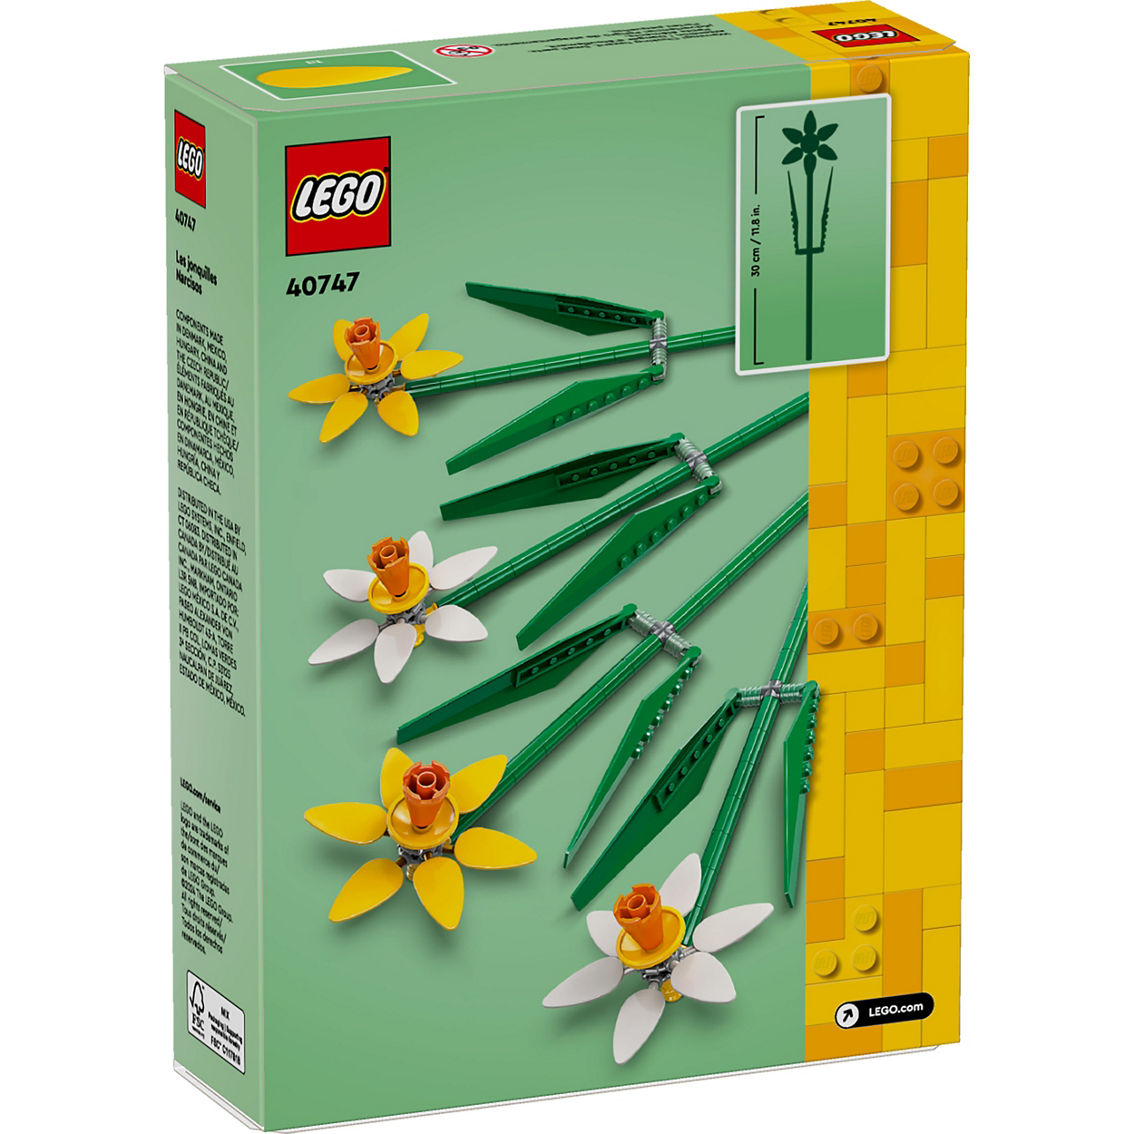 LEGO Daffodils 40747 - Image 2 of 10